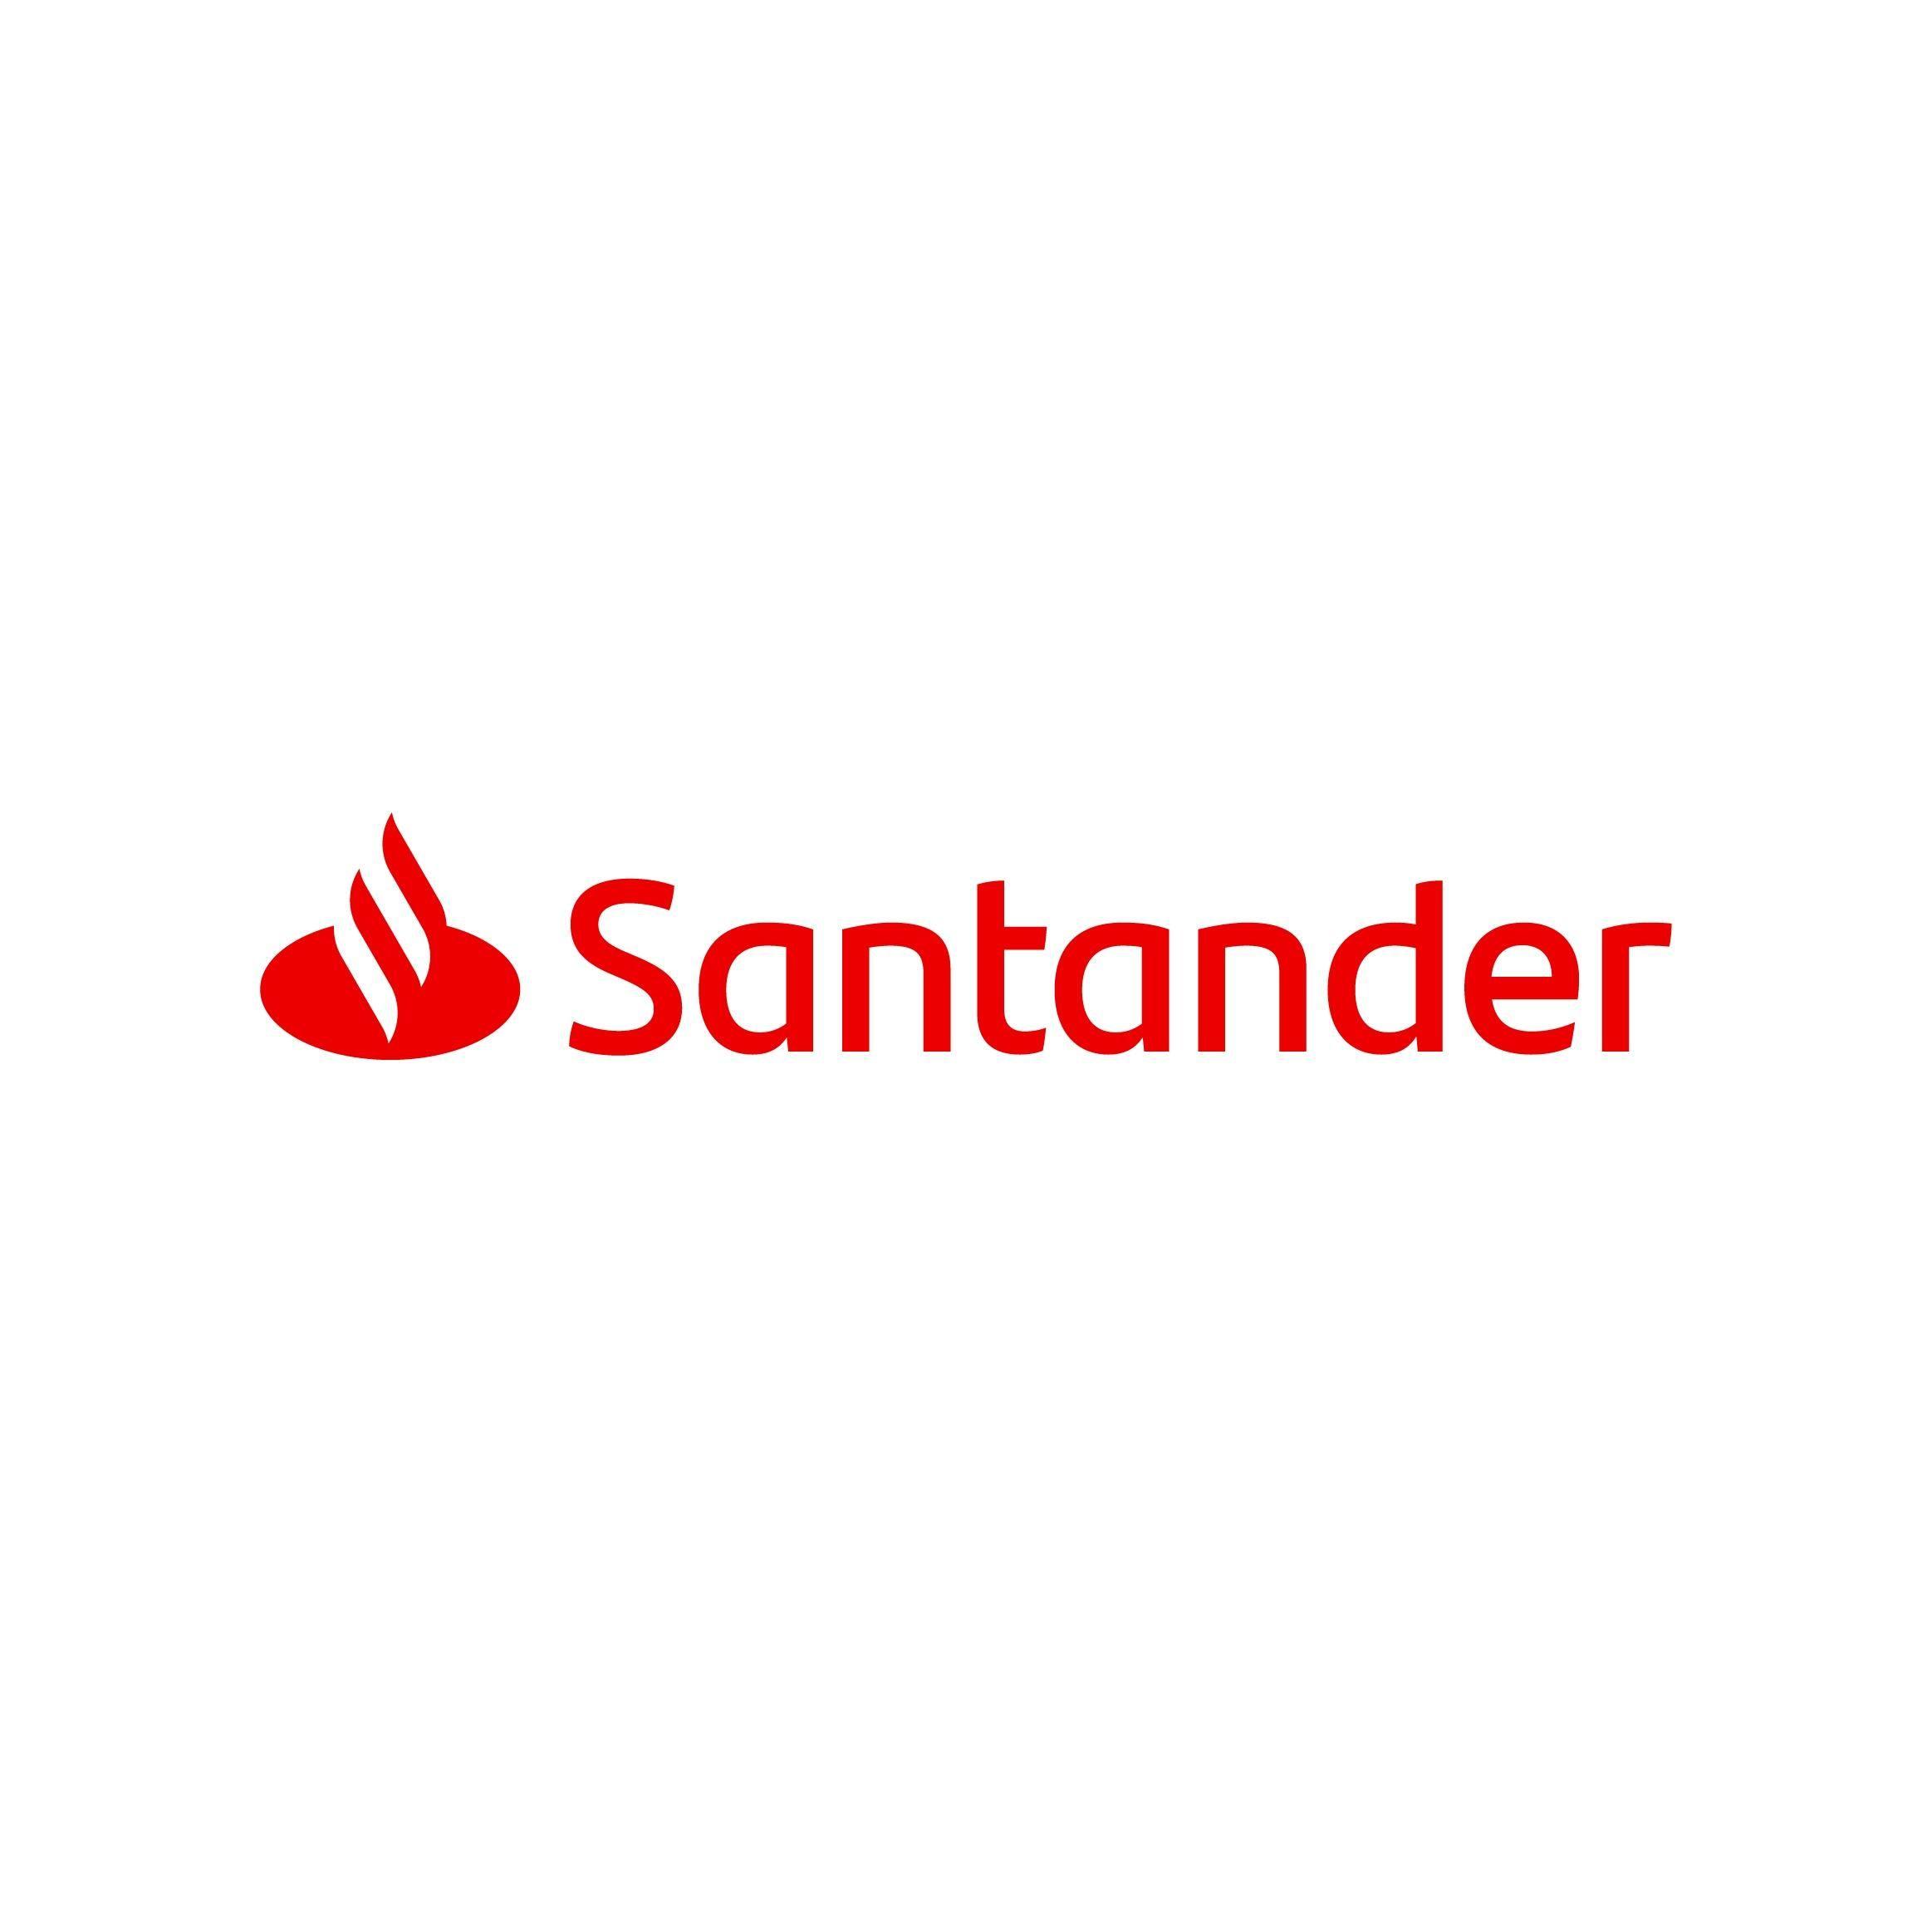 Red Bank Logo - Santander Bank in Red Bank, NJ Broad Street. Checking